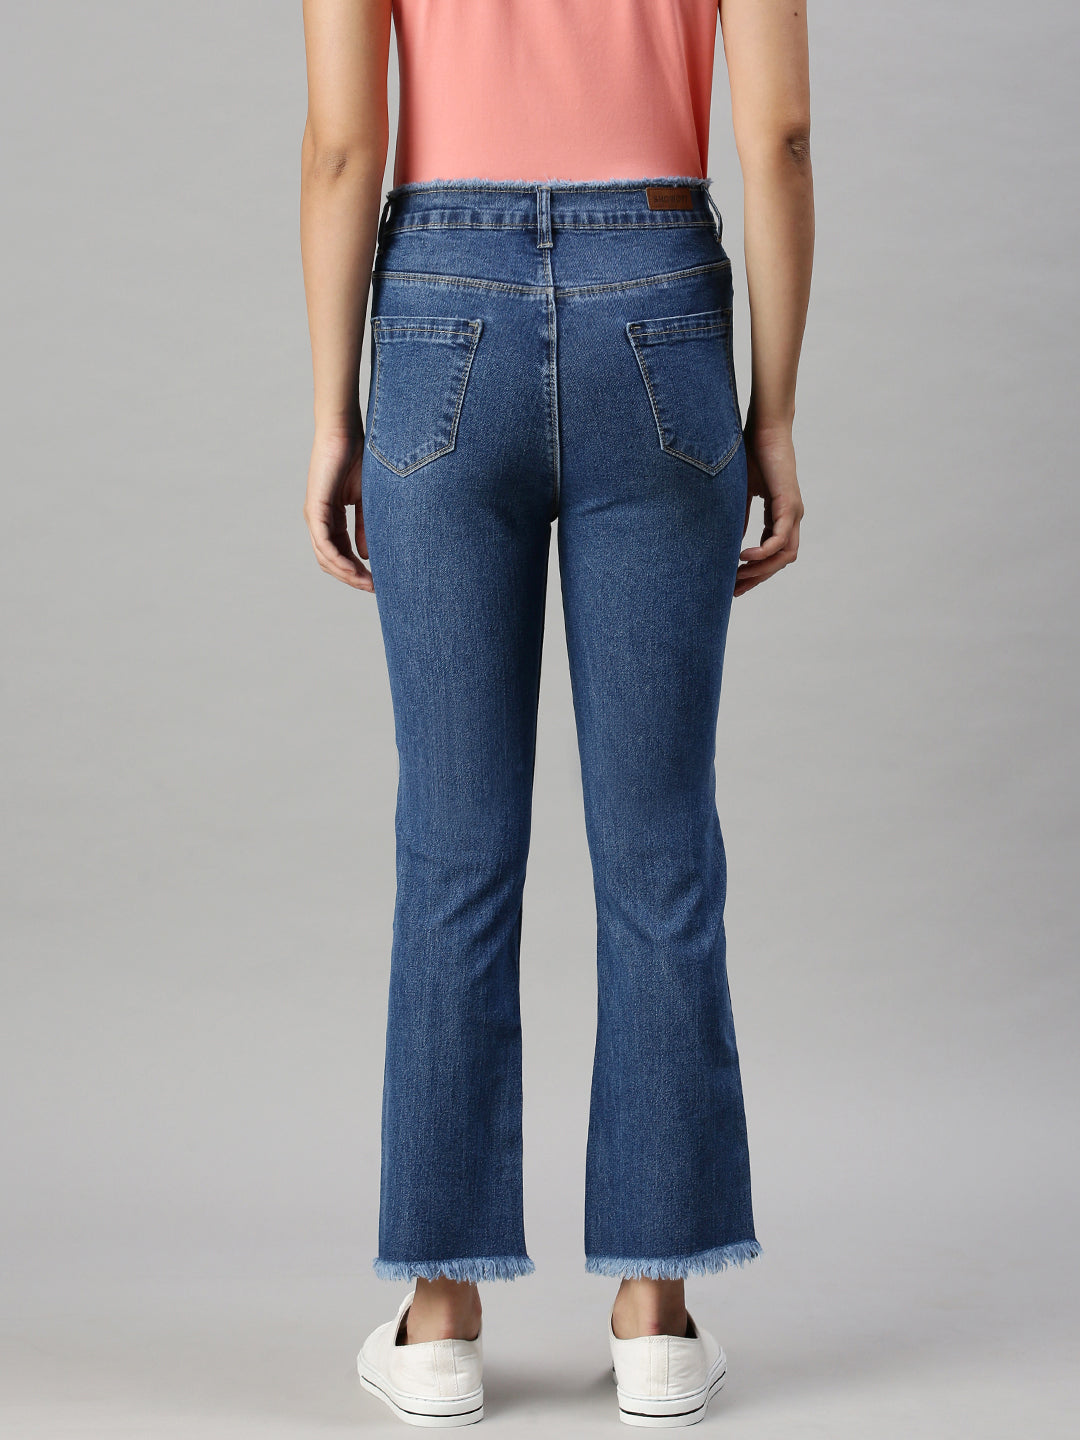 Women's Denim Straight Fit Navy Blue Jeans